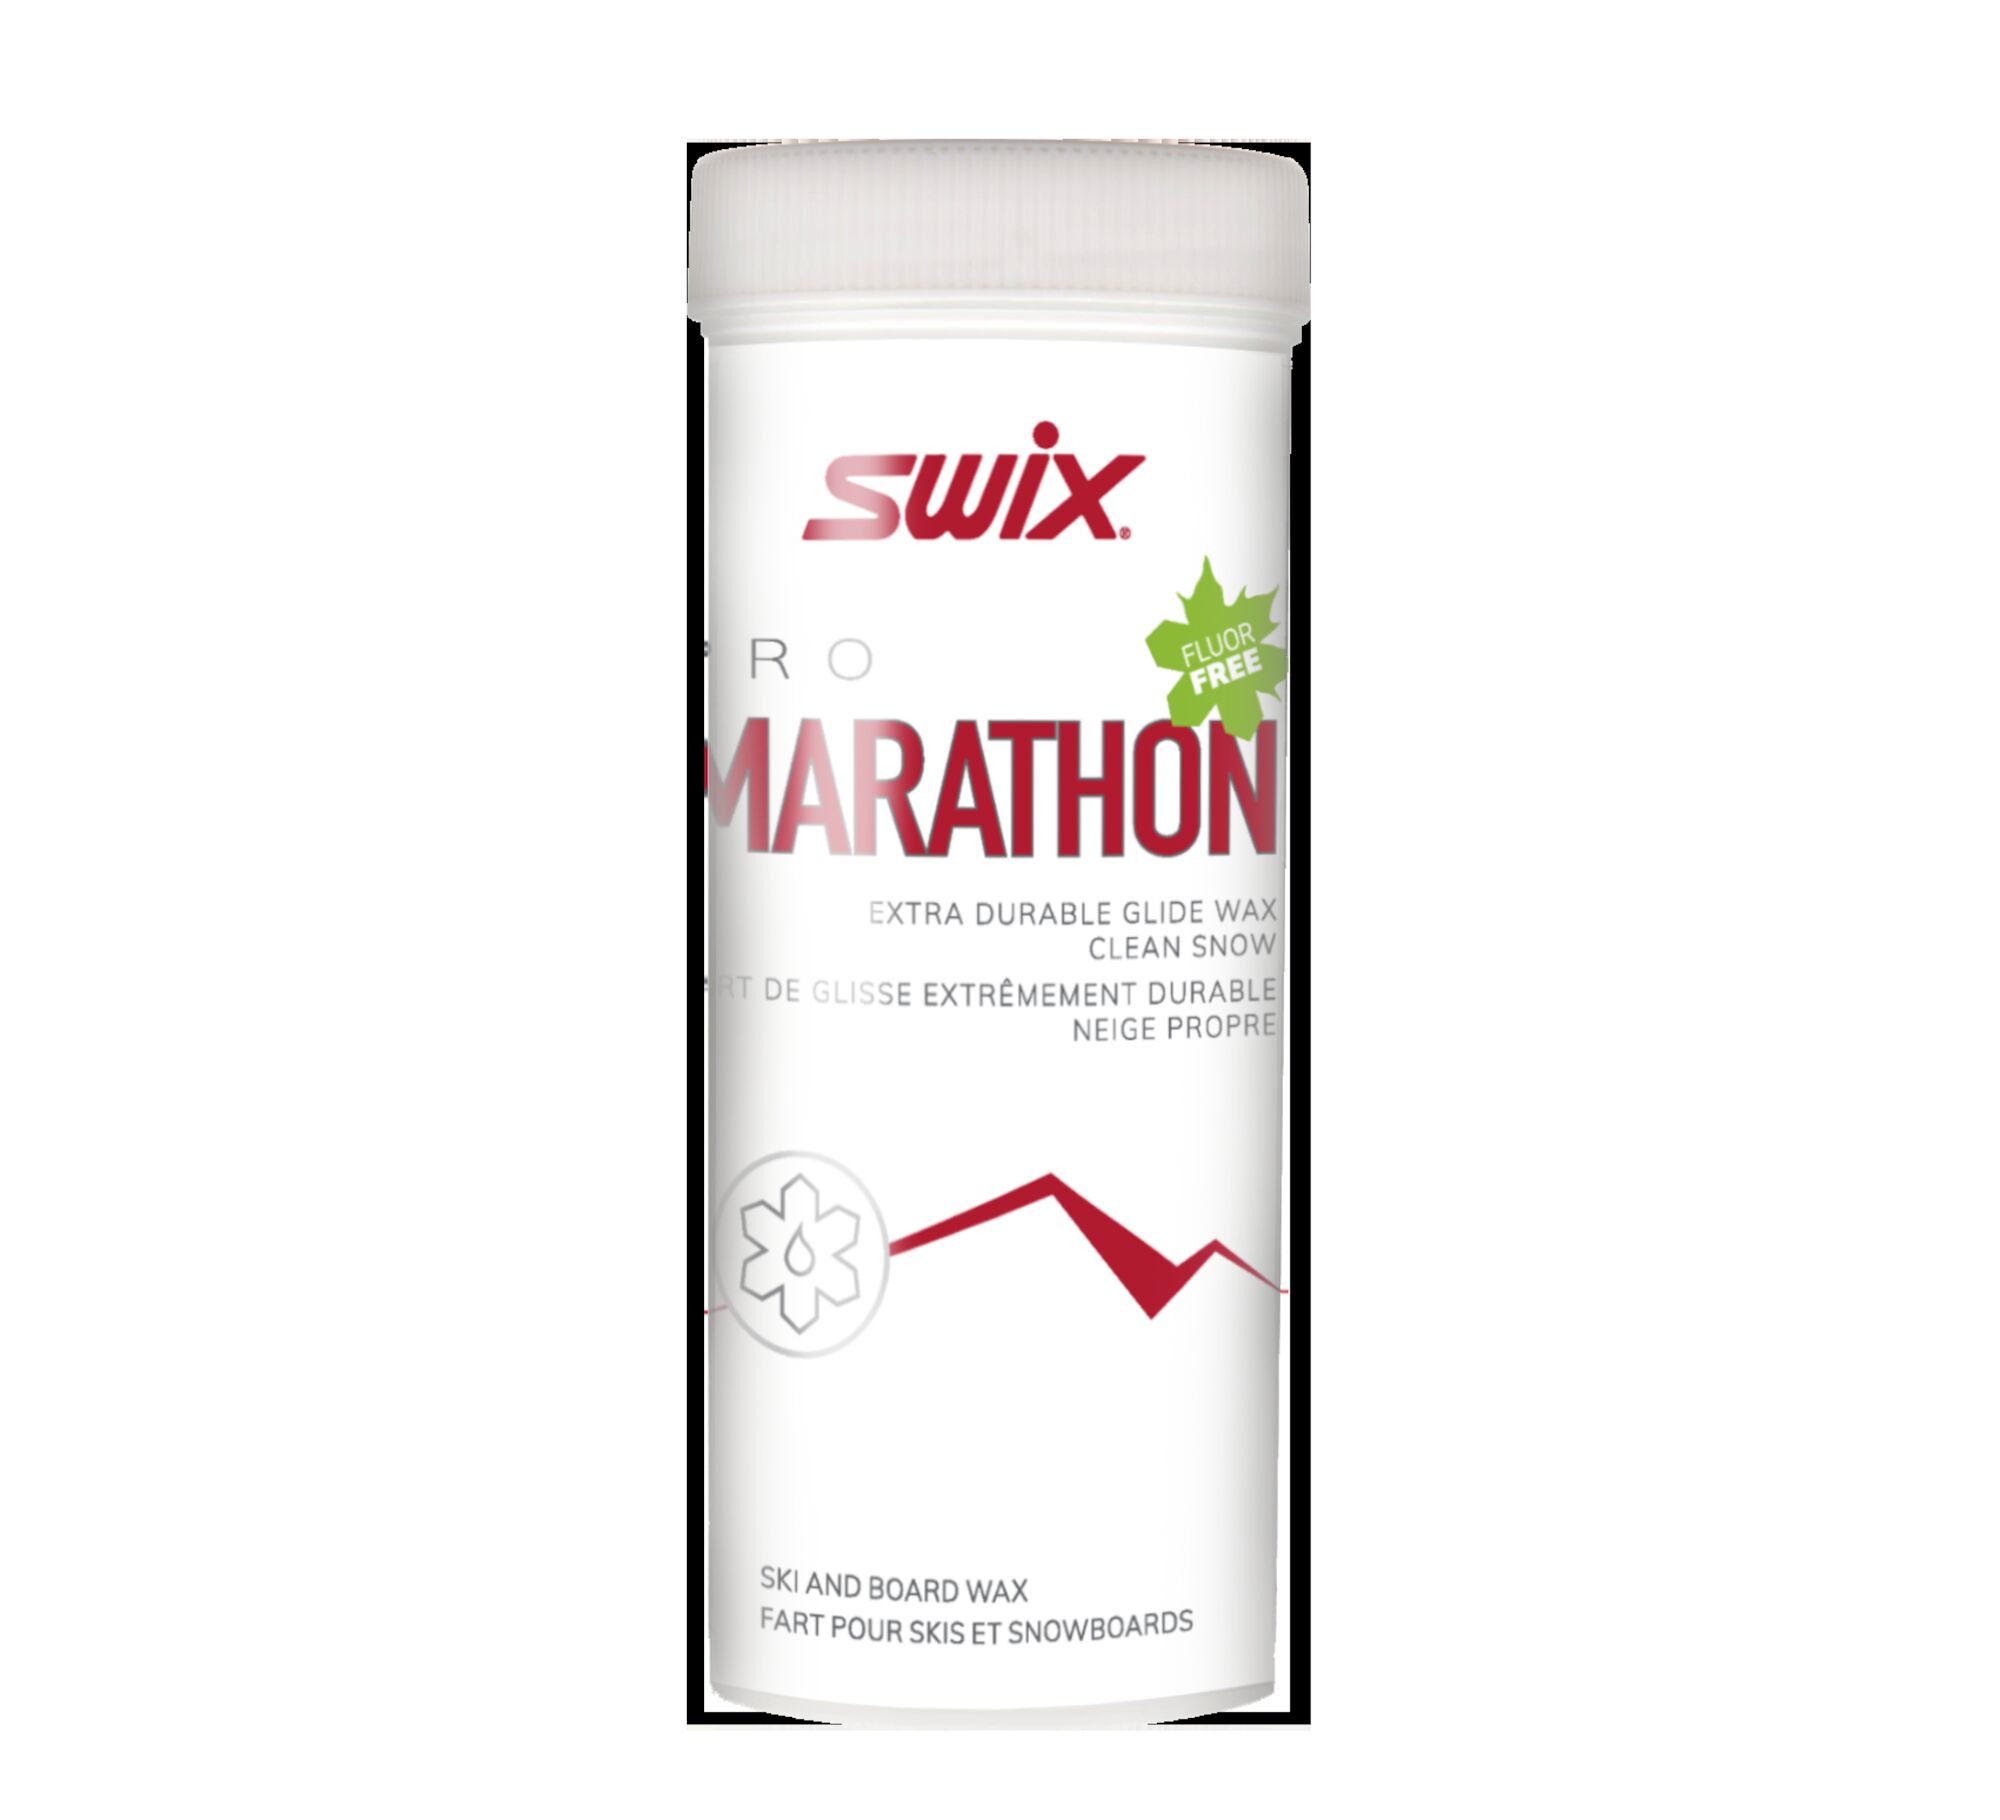 SWIX Marathon Pow. Fluor Free, 40 g